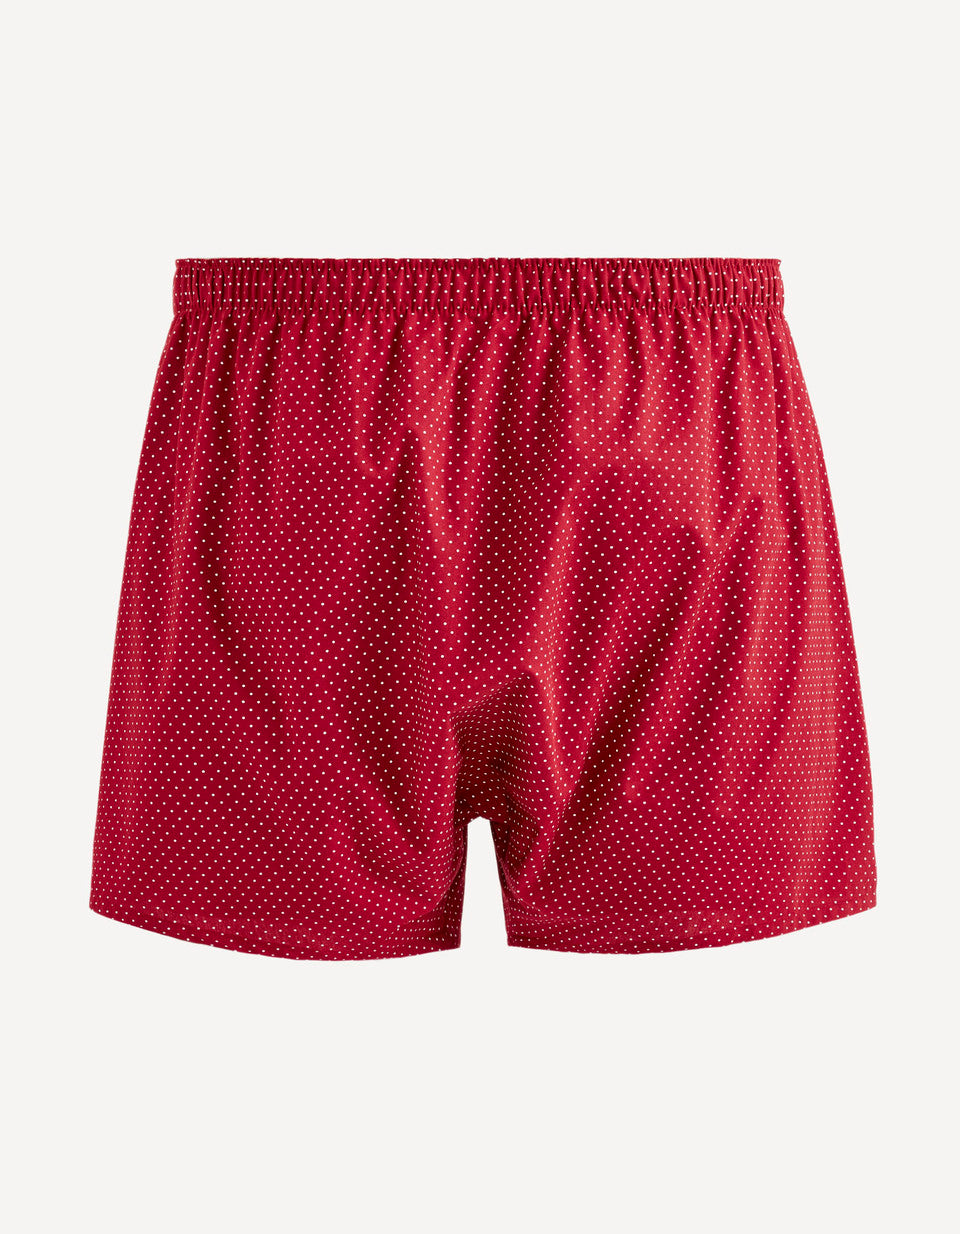 100% Cotton Poplin Boxer Shorts With Polka Dots - Burgundy - 02